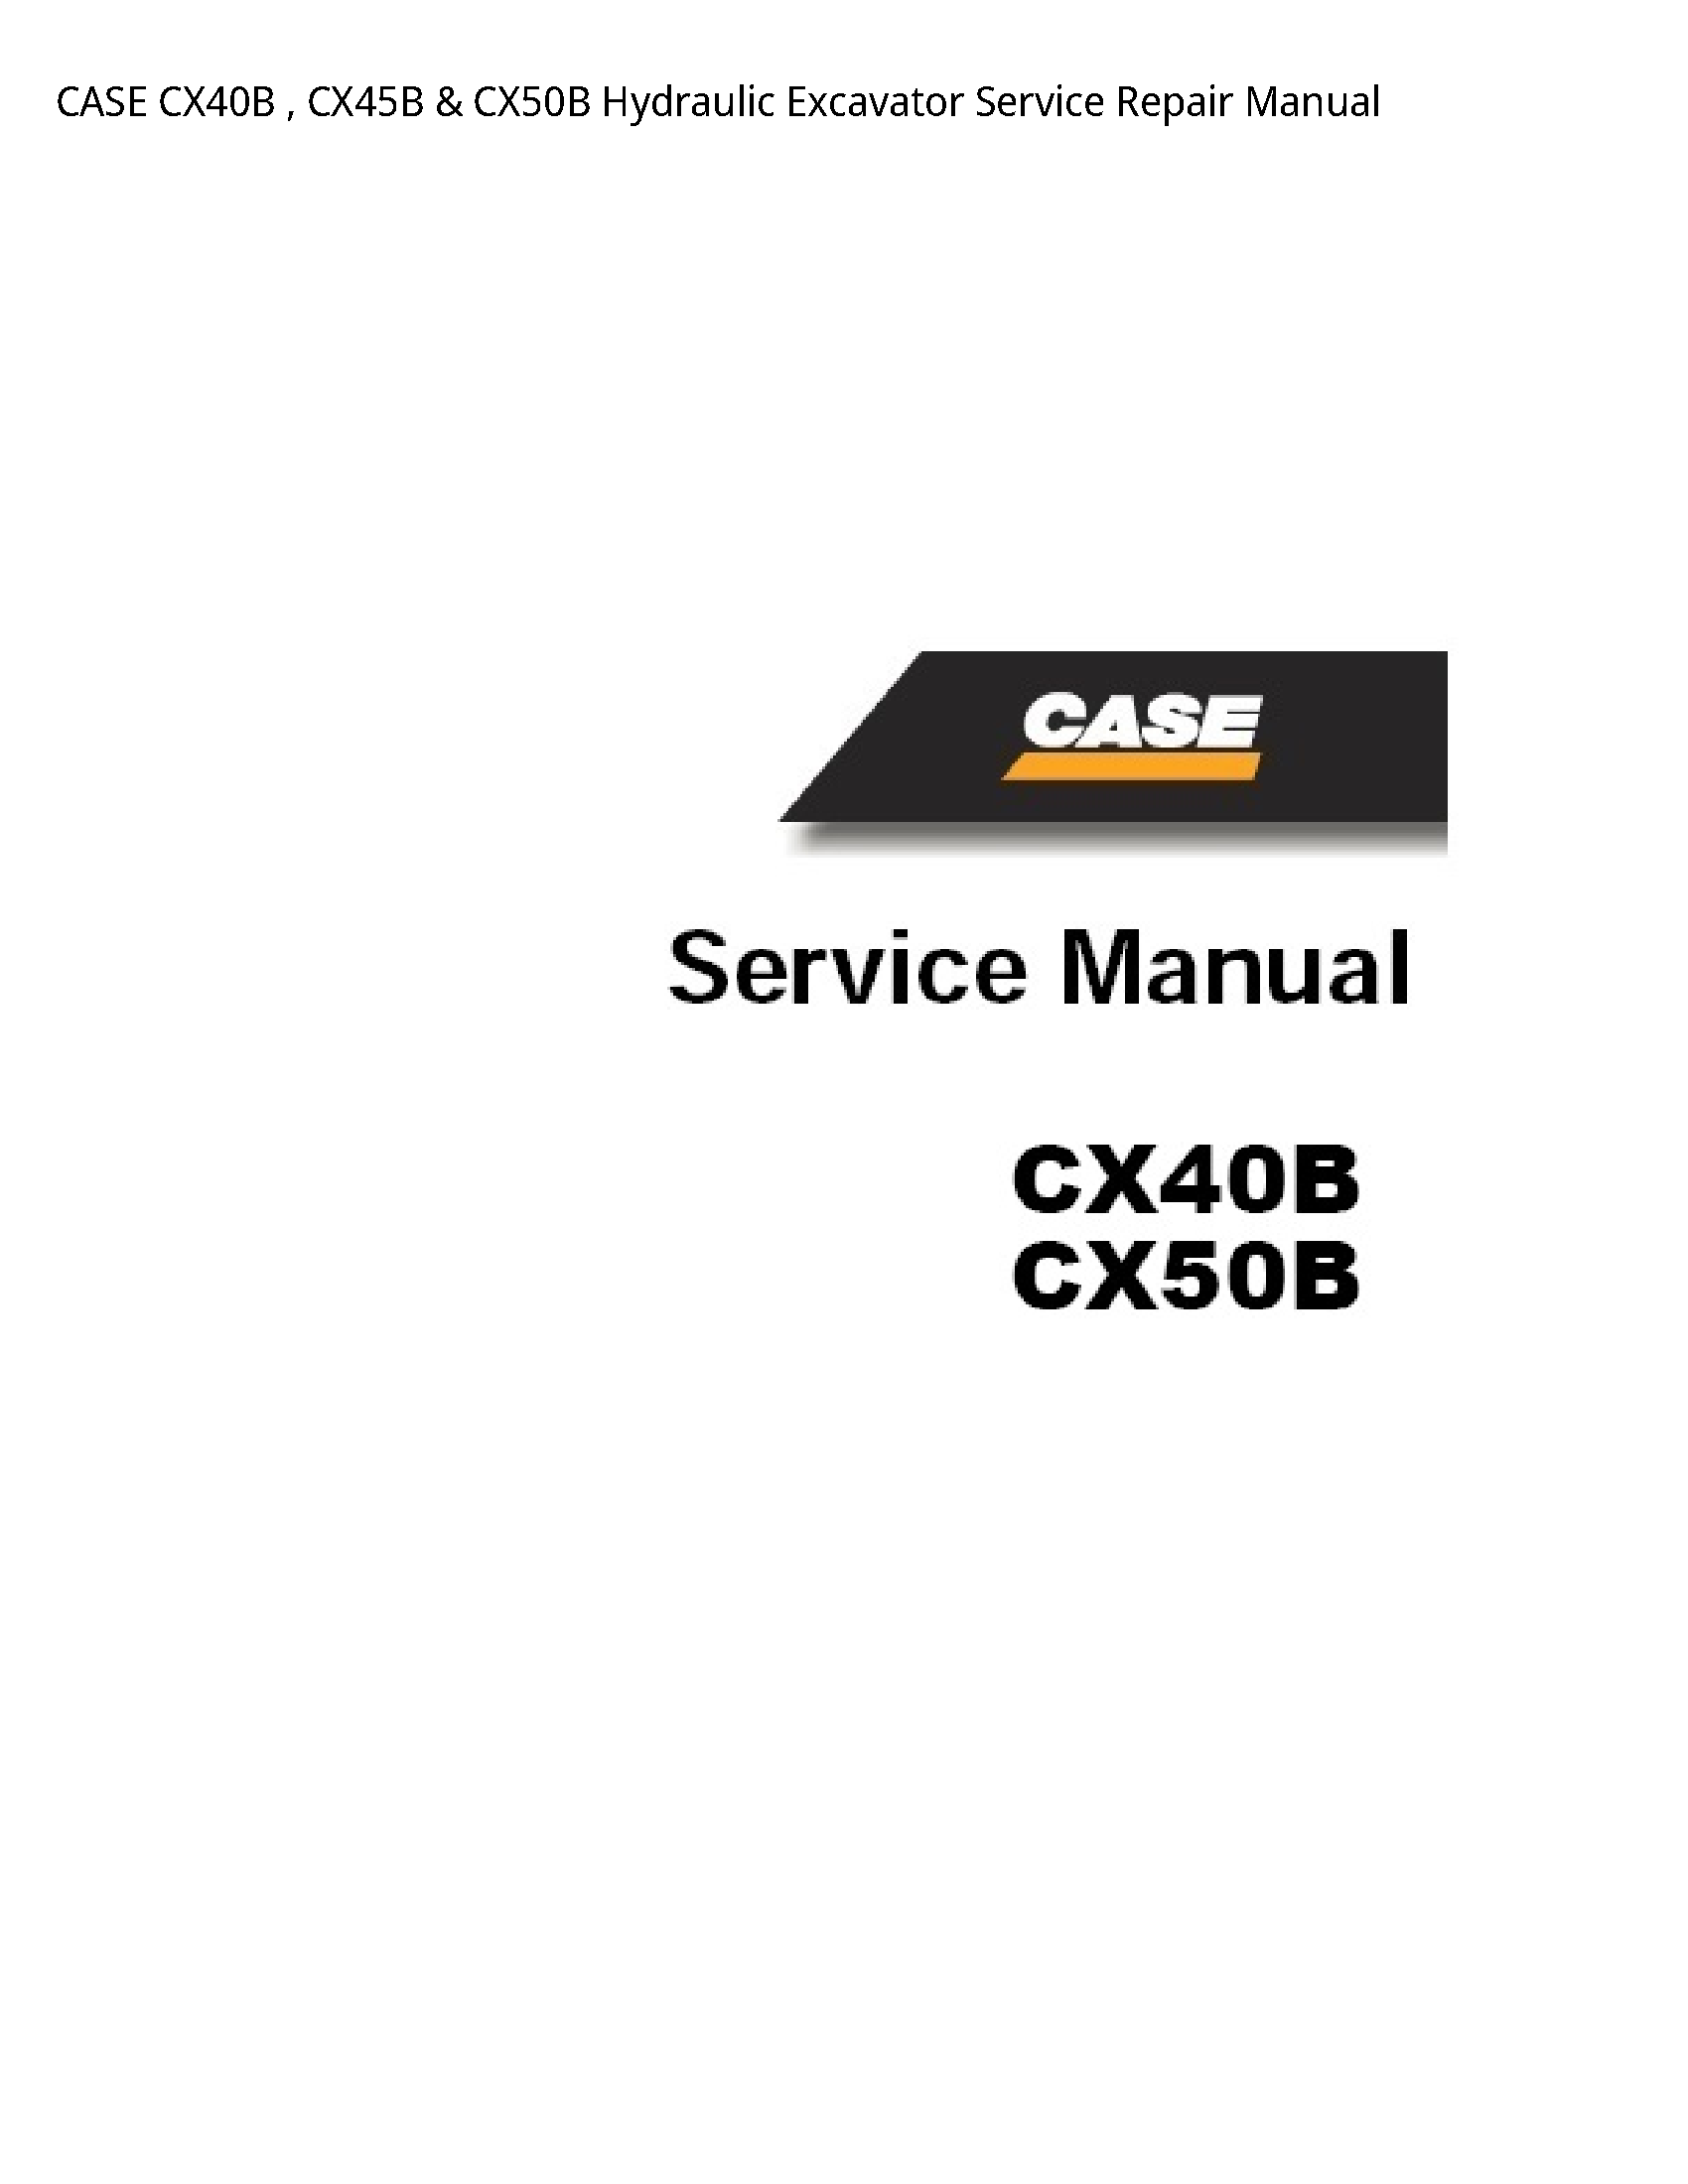 Case/Case IH CX40B Hydraulic Excavator manual